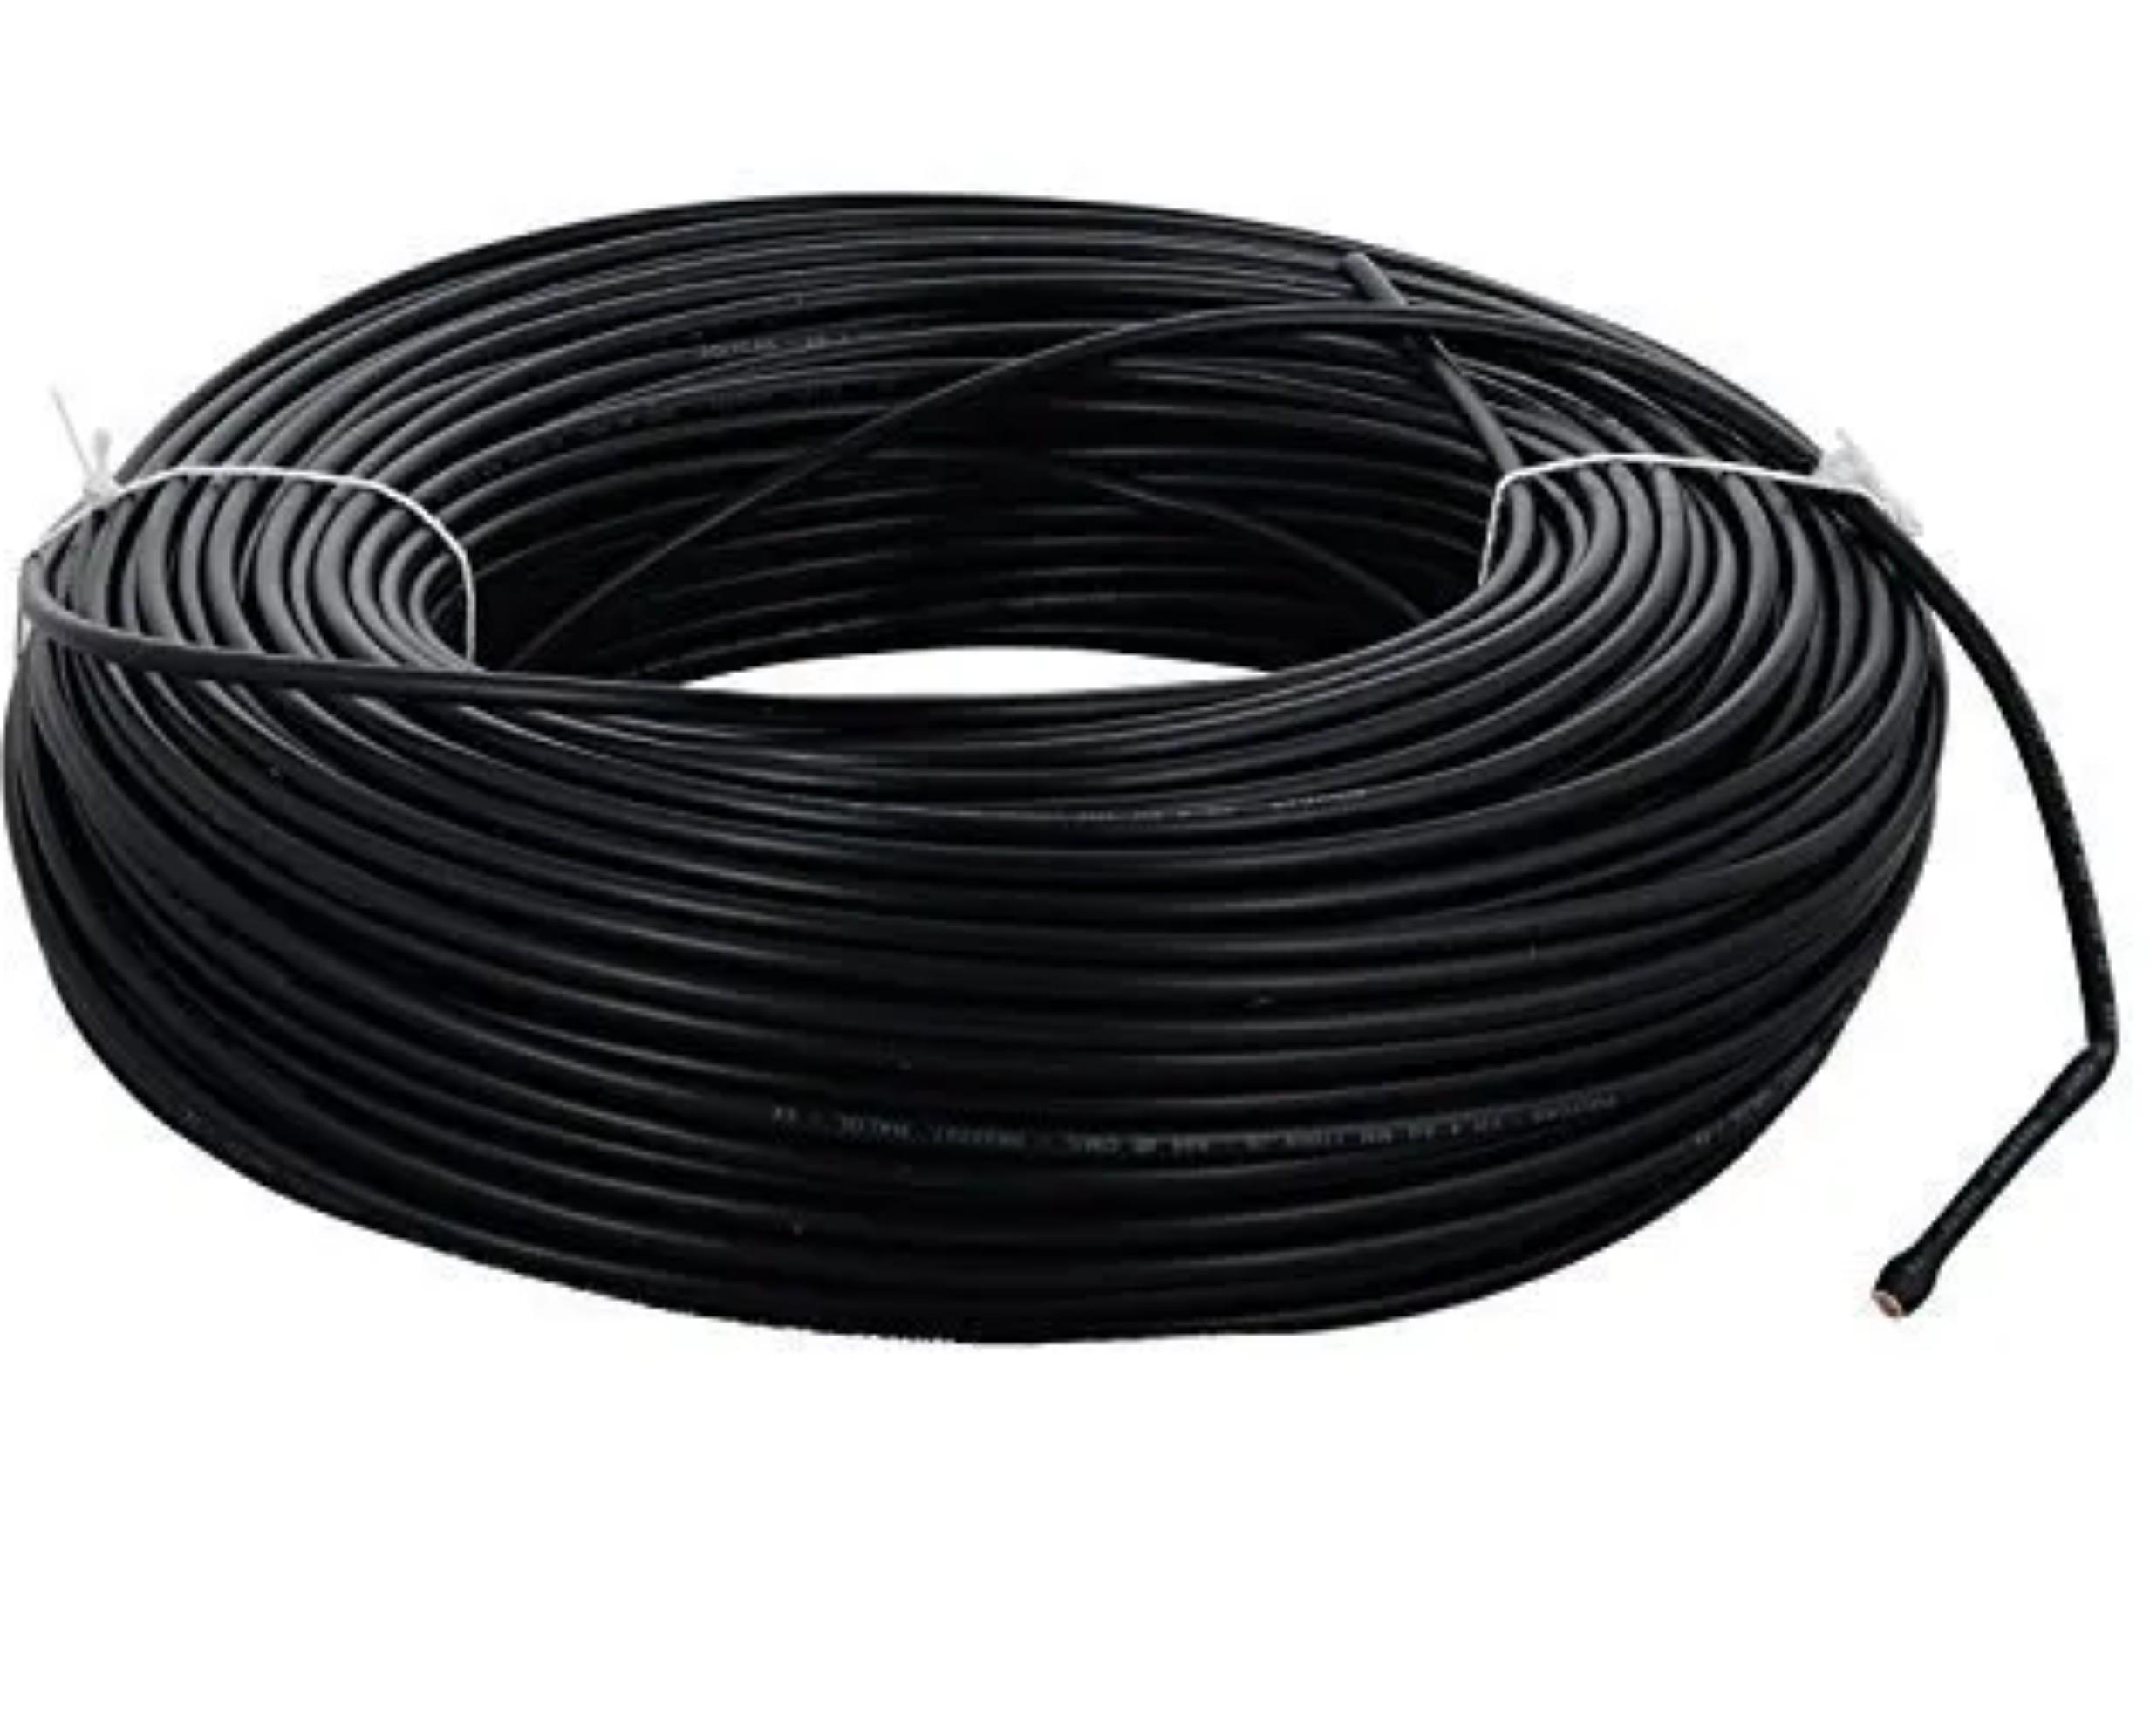 KEI 1 Core 16 sqmm Industrial Flexible Cables 100 m Copper 450 V_0